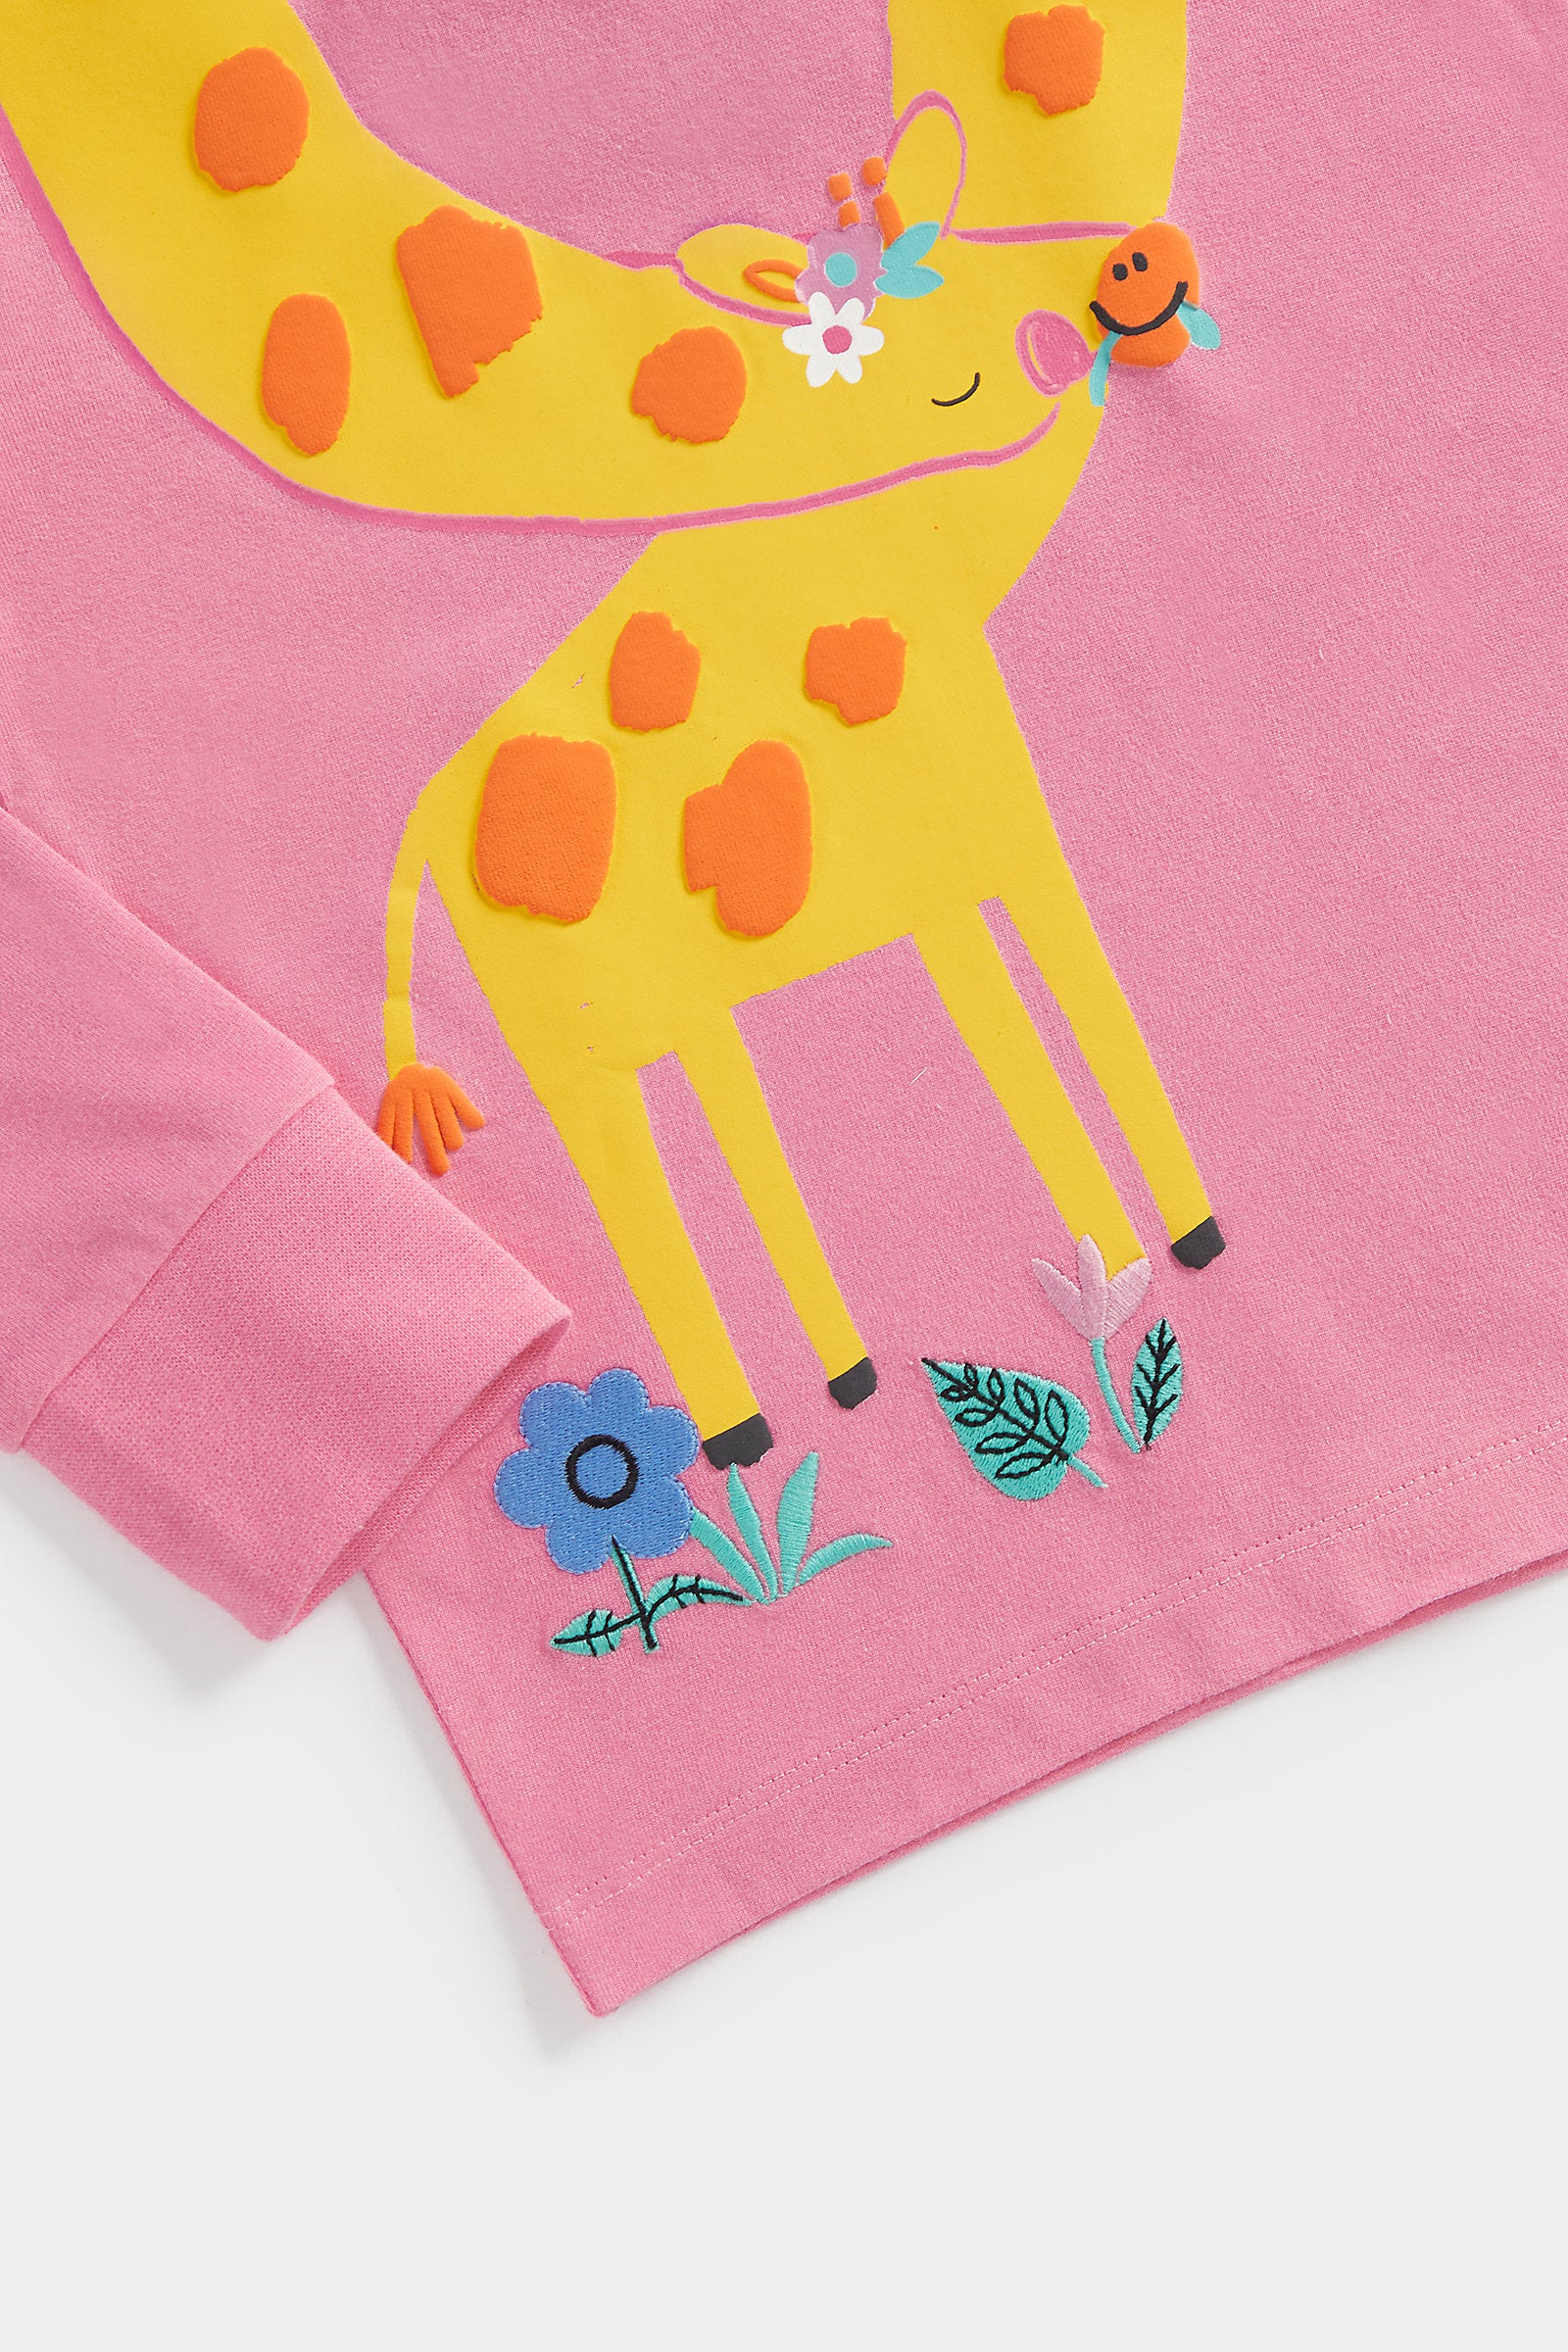 Mothercare Giraffe Pyjamas - 2 Pack